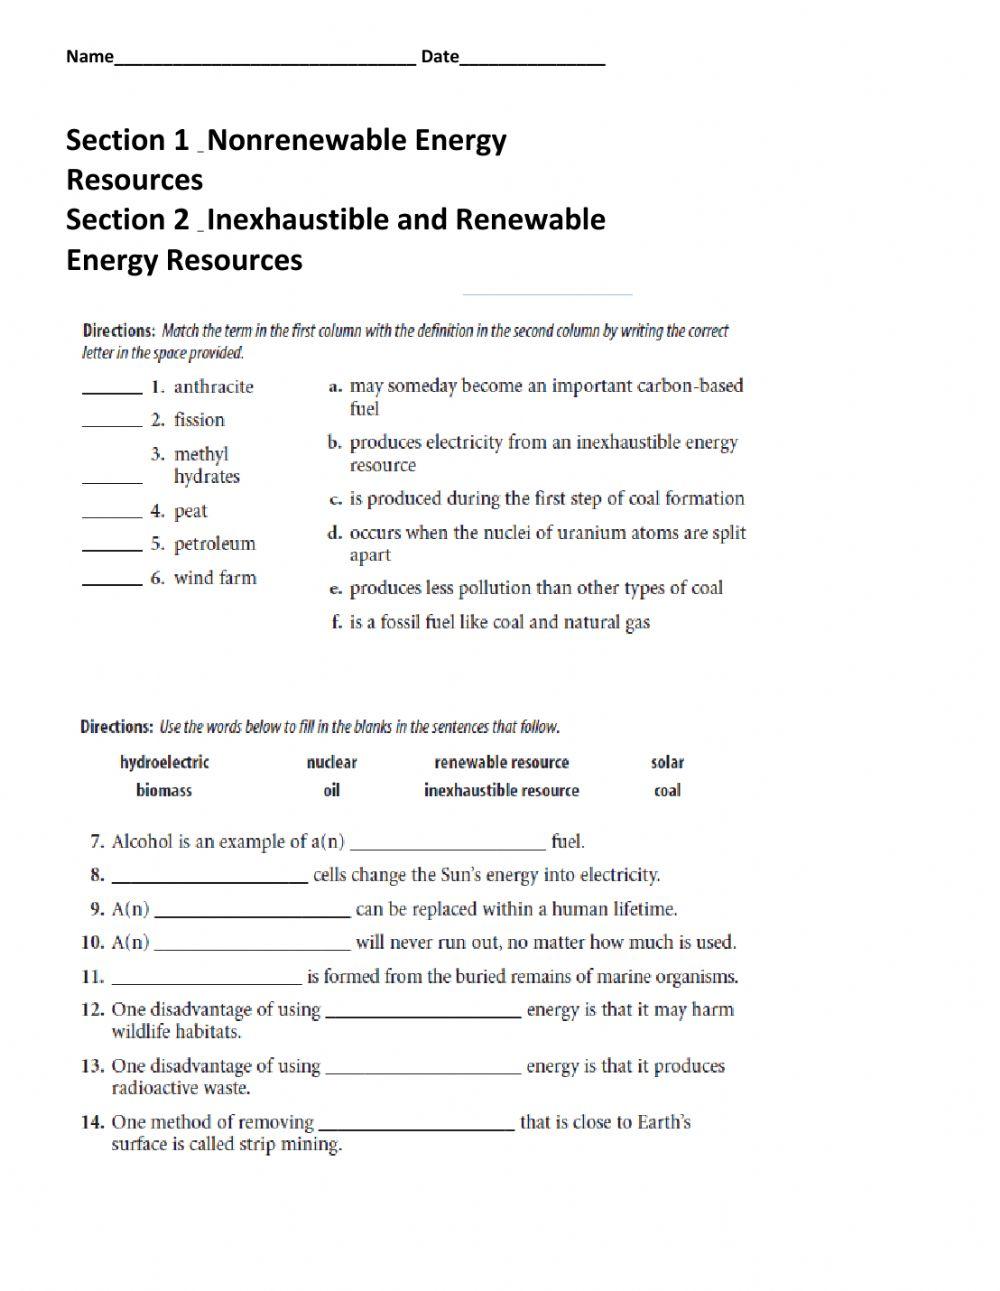 Inexhaustible and Renewable Energy Resources